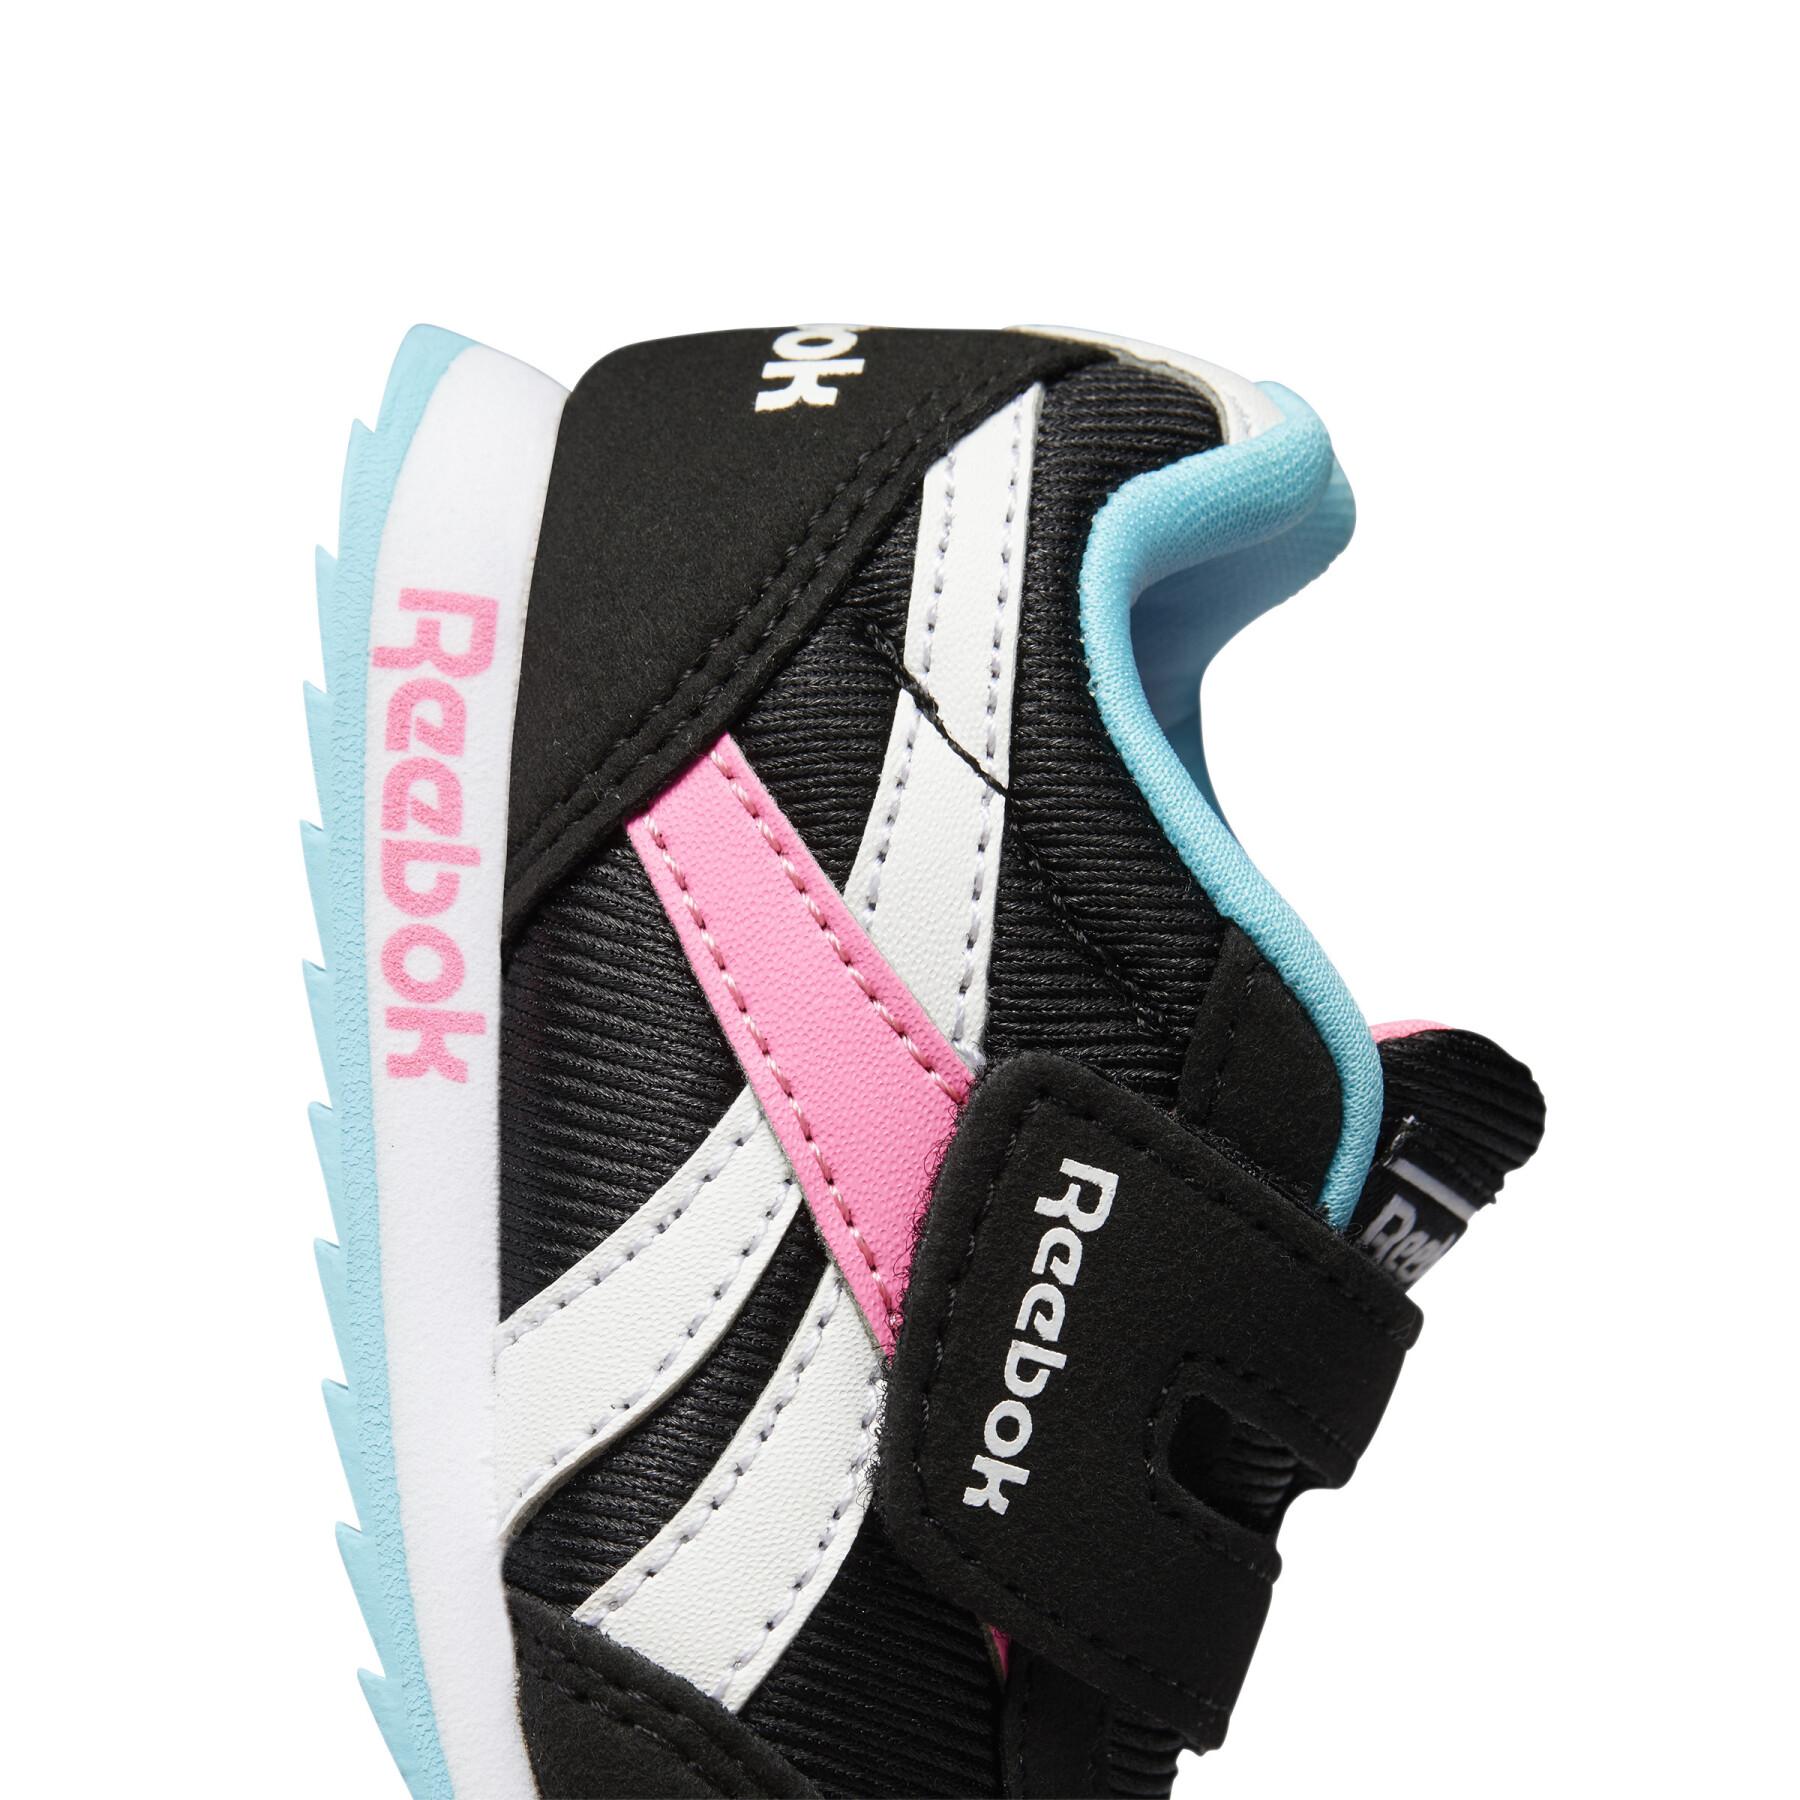 Reebok Jogger 2.0 Zapatillas infantiles para mujer